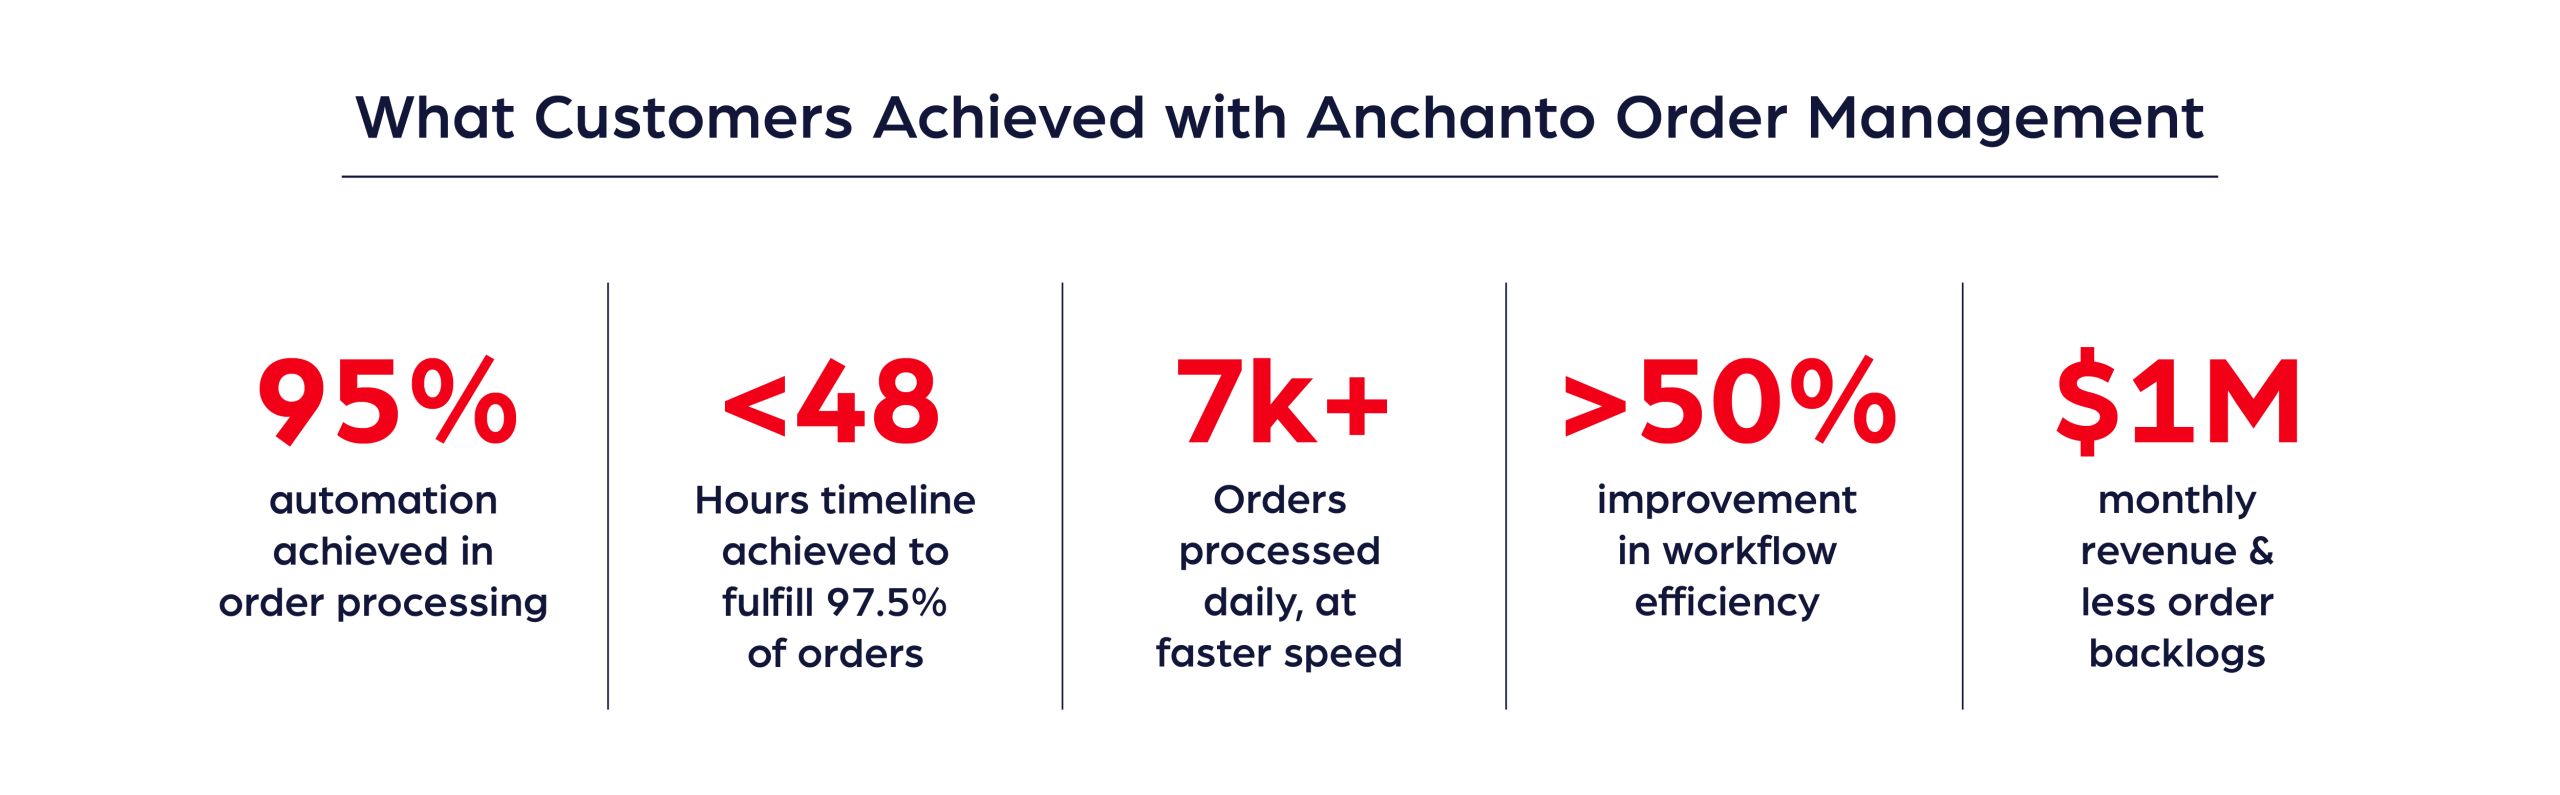 Anchanto-Order-Management